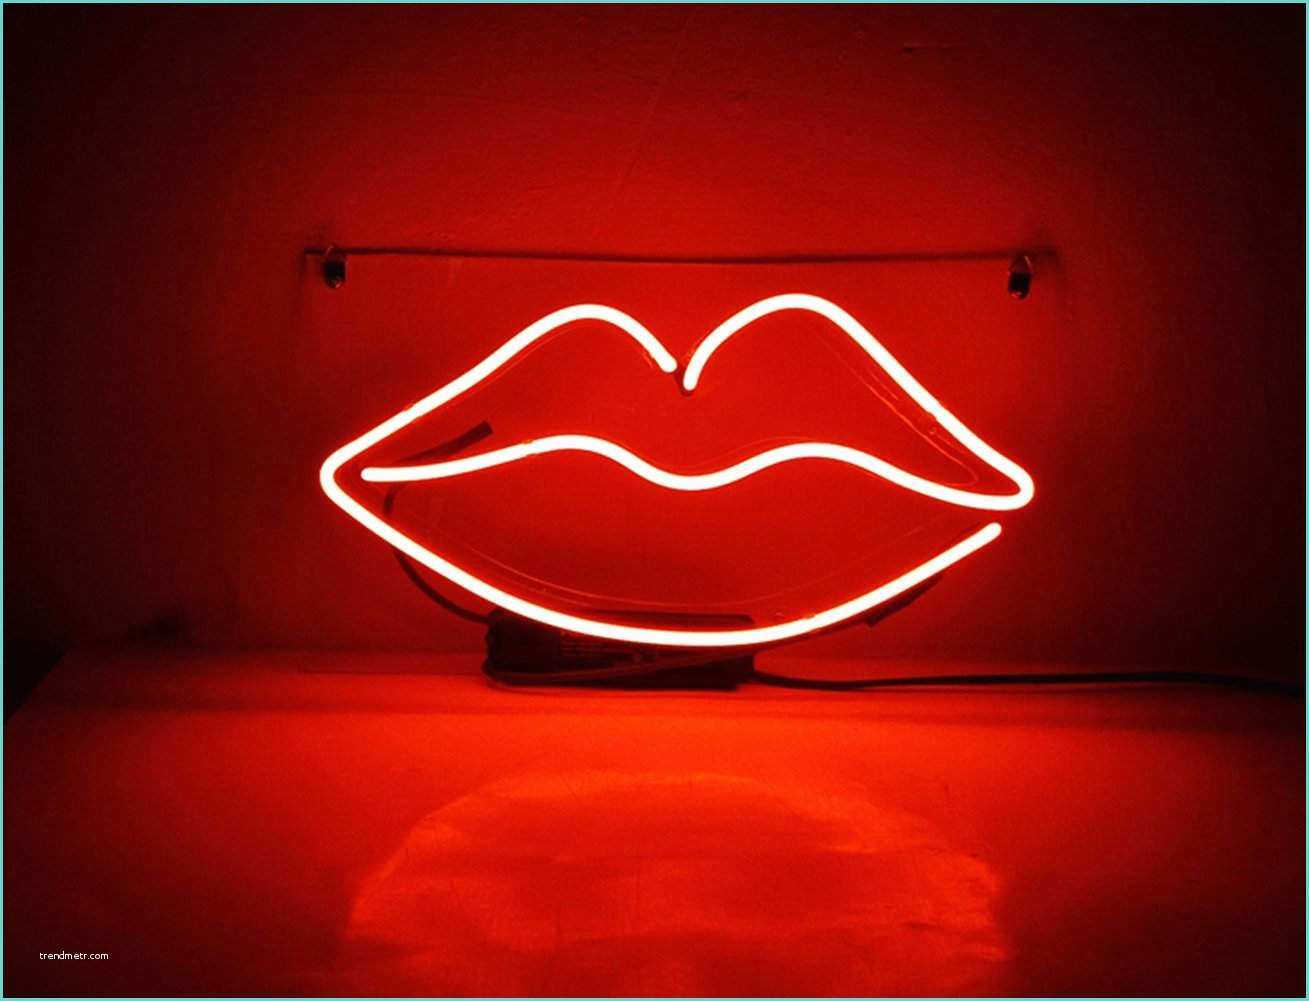 Neon Light Signs Warrington Handmade Kiss Red Lips Neon Sign Light Room Display Art